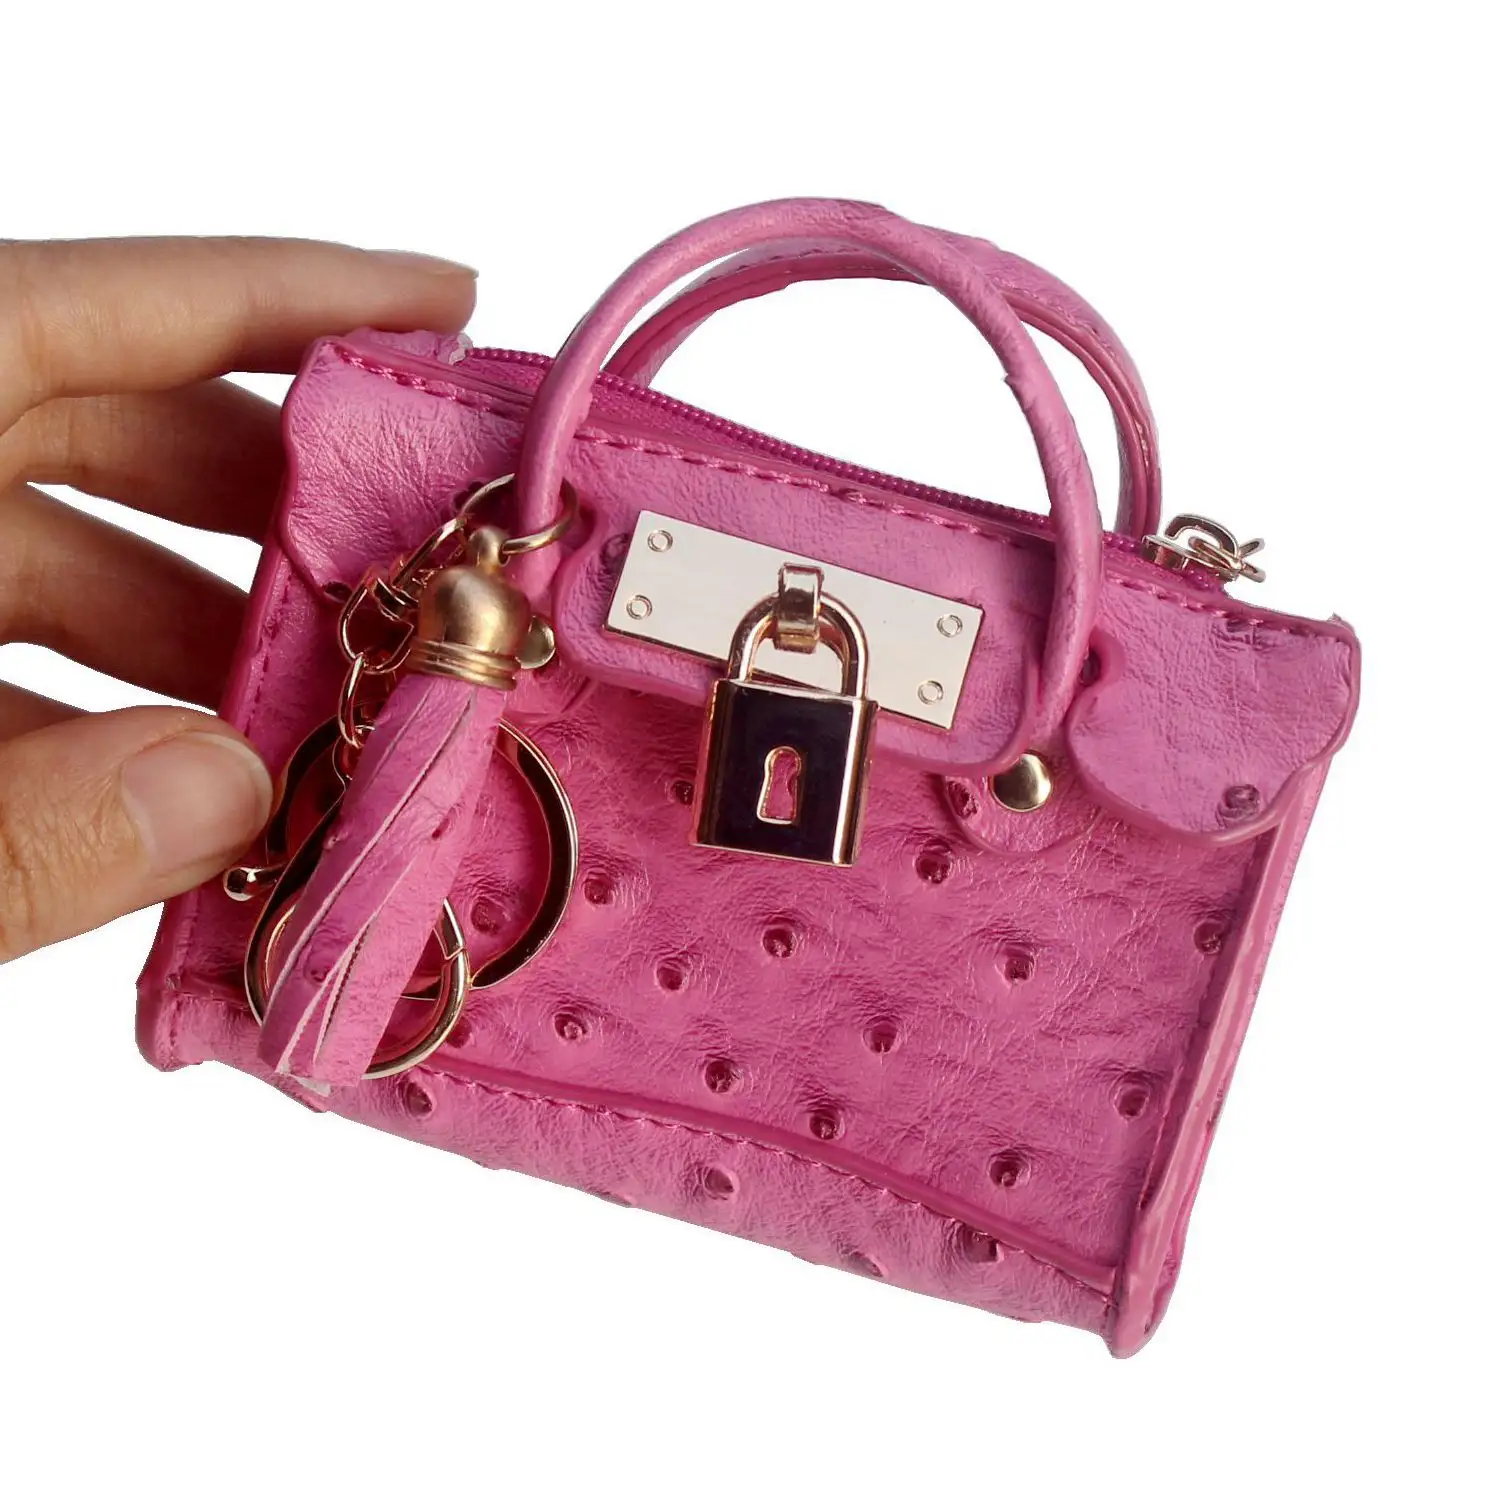 Luxury Designer Inspired Mini Handbag Hangers Ornaments Tiny Cute Bag Purse Charms Key Holder Coin Cash Case